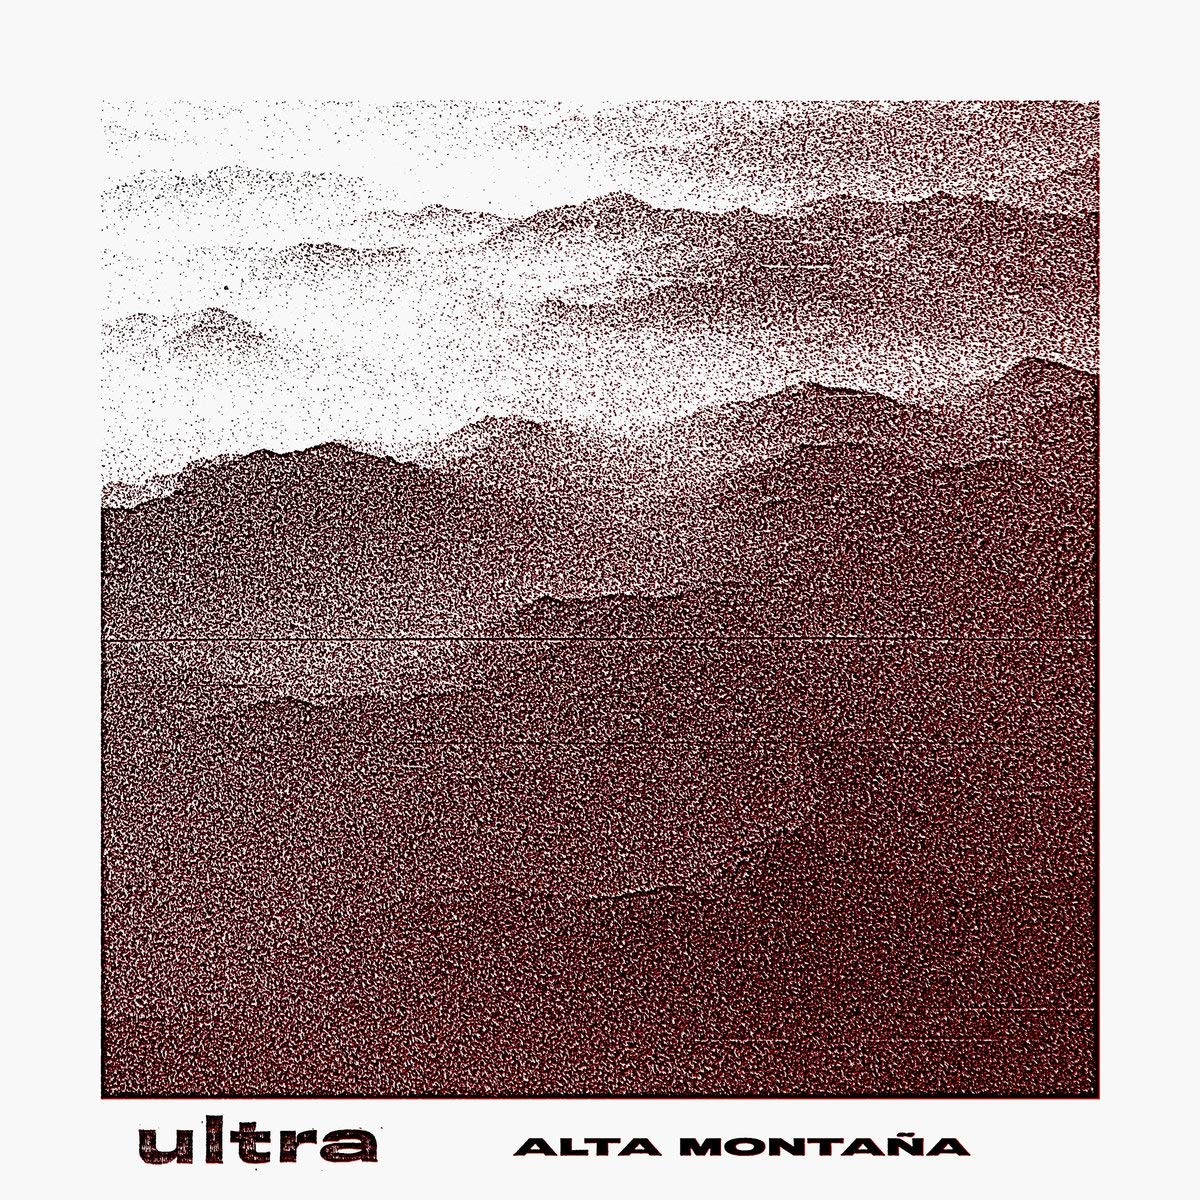 Ultra - Alta Montana vinyl cover